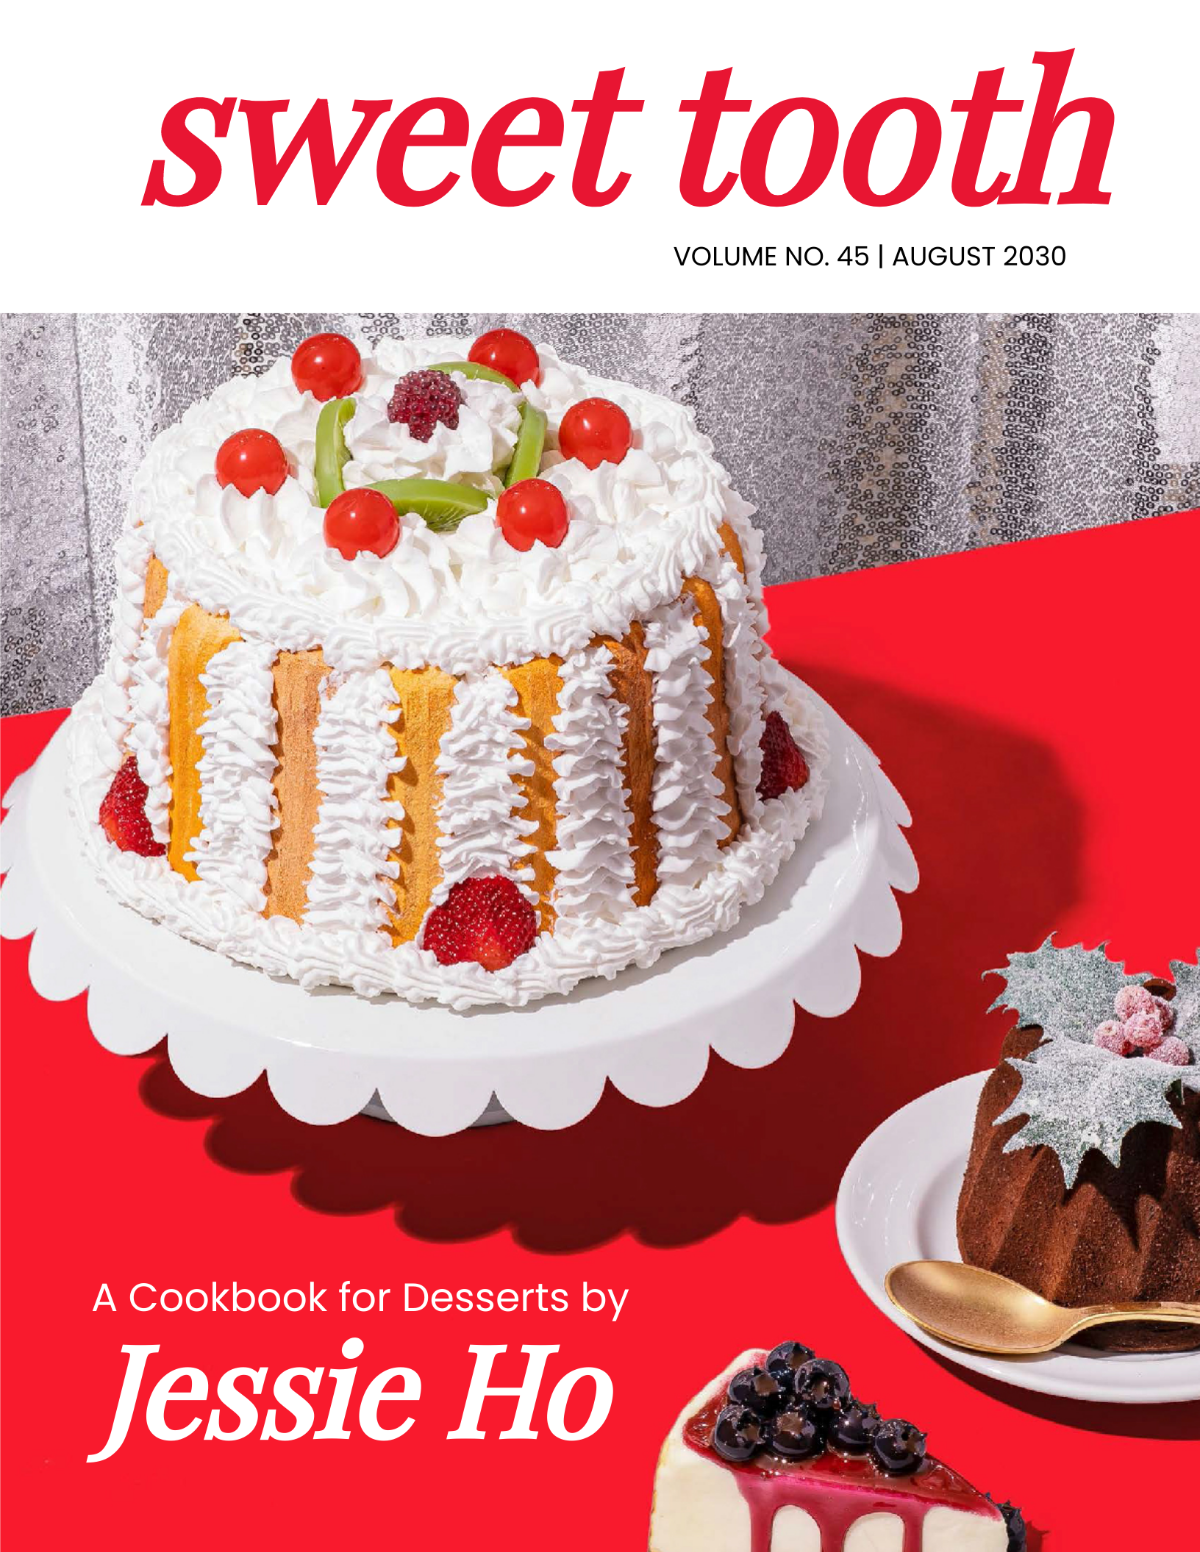 Sample Desserts CookBook